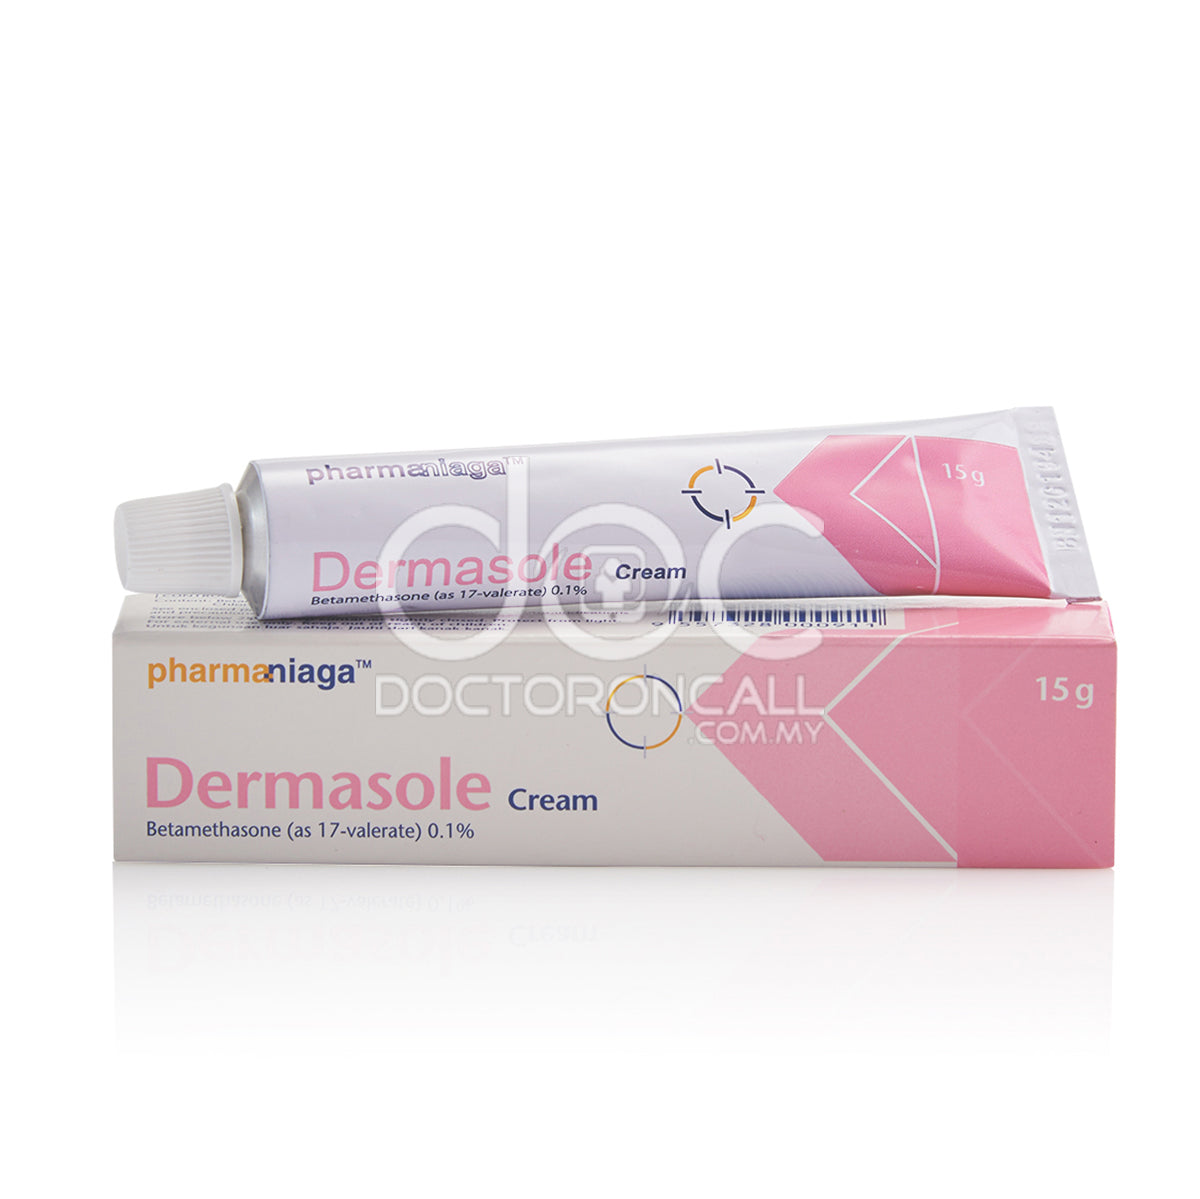 Pharmaniaga Dermasole Cream Uses Dosage Side Effects Price Benefits Online Pharmacy Doctoroncall